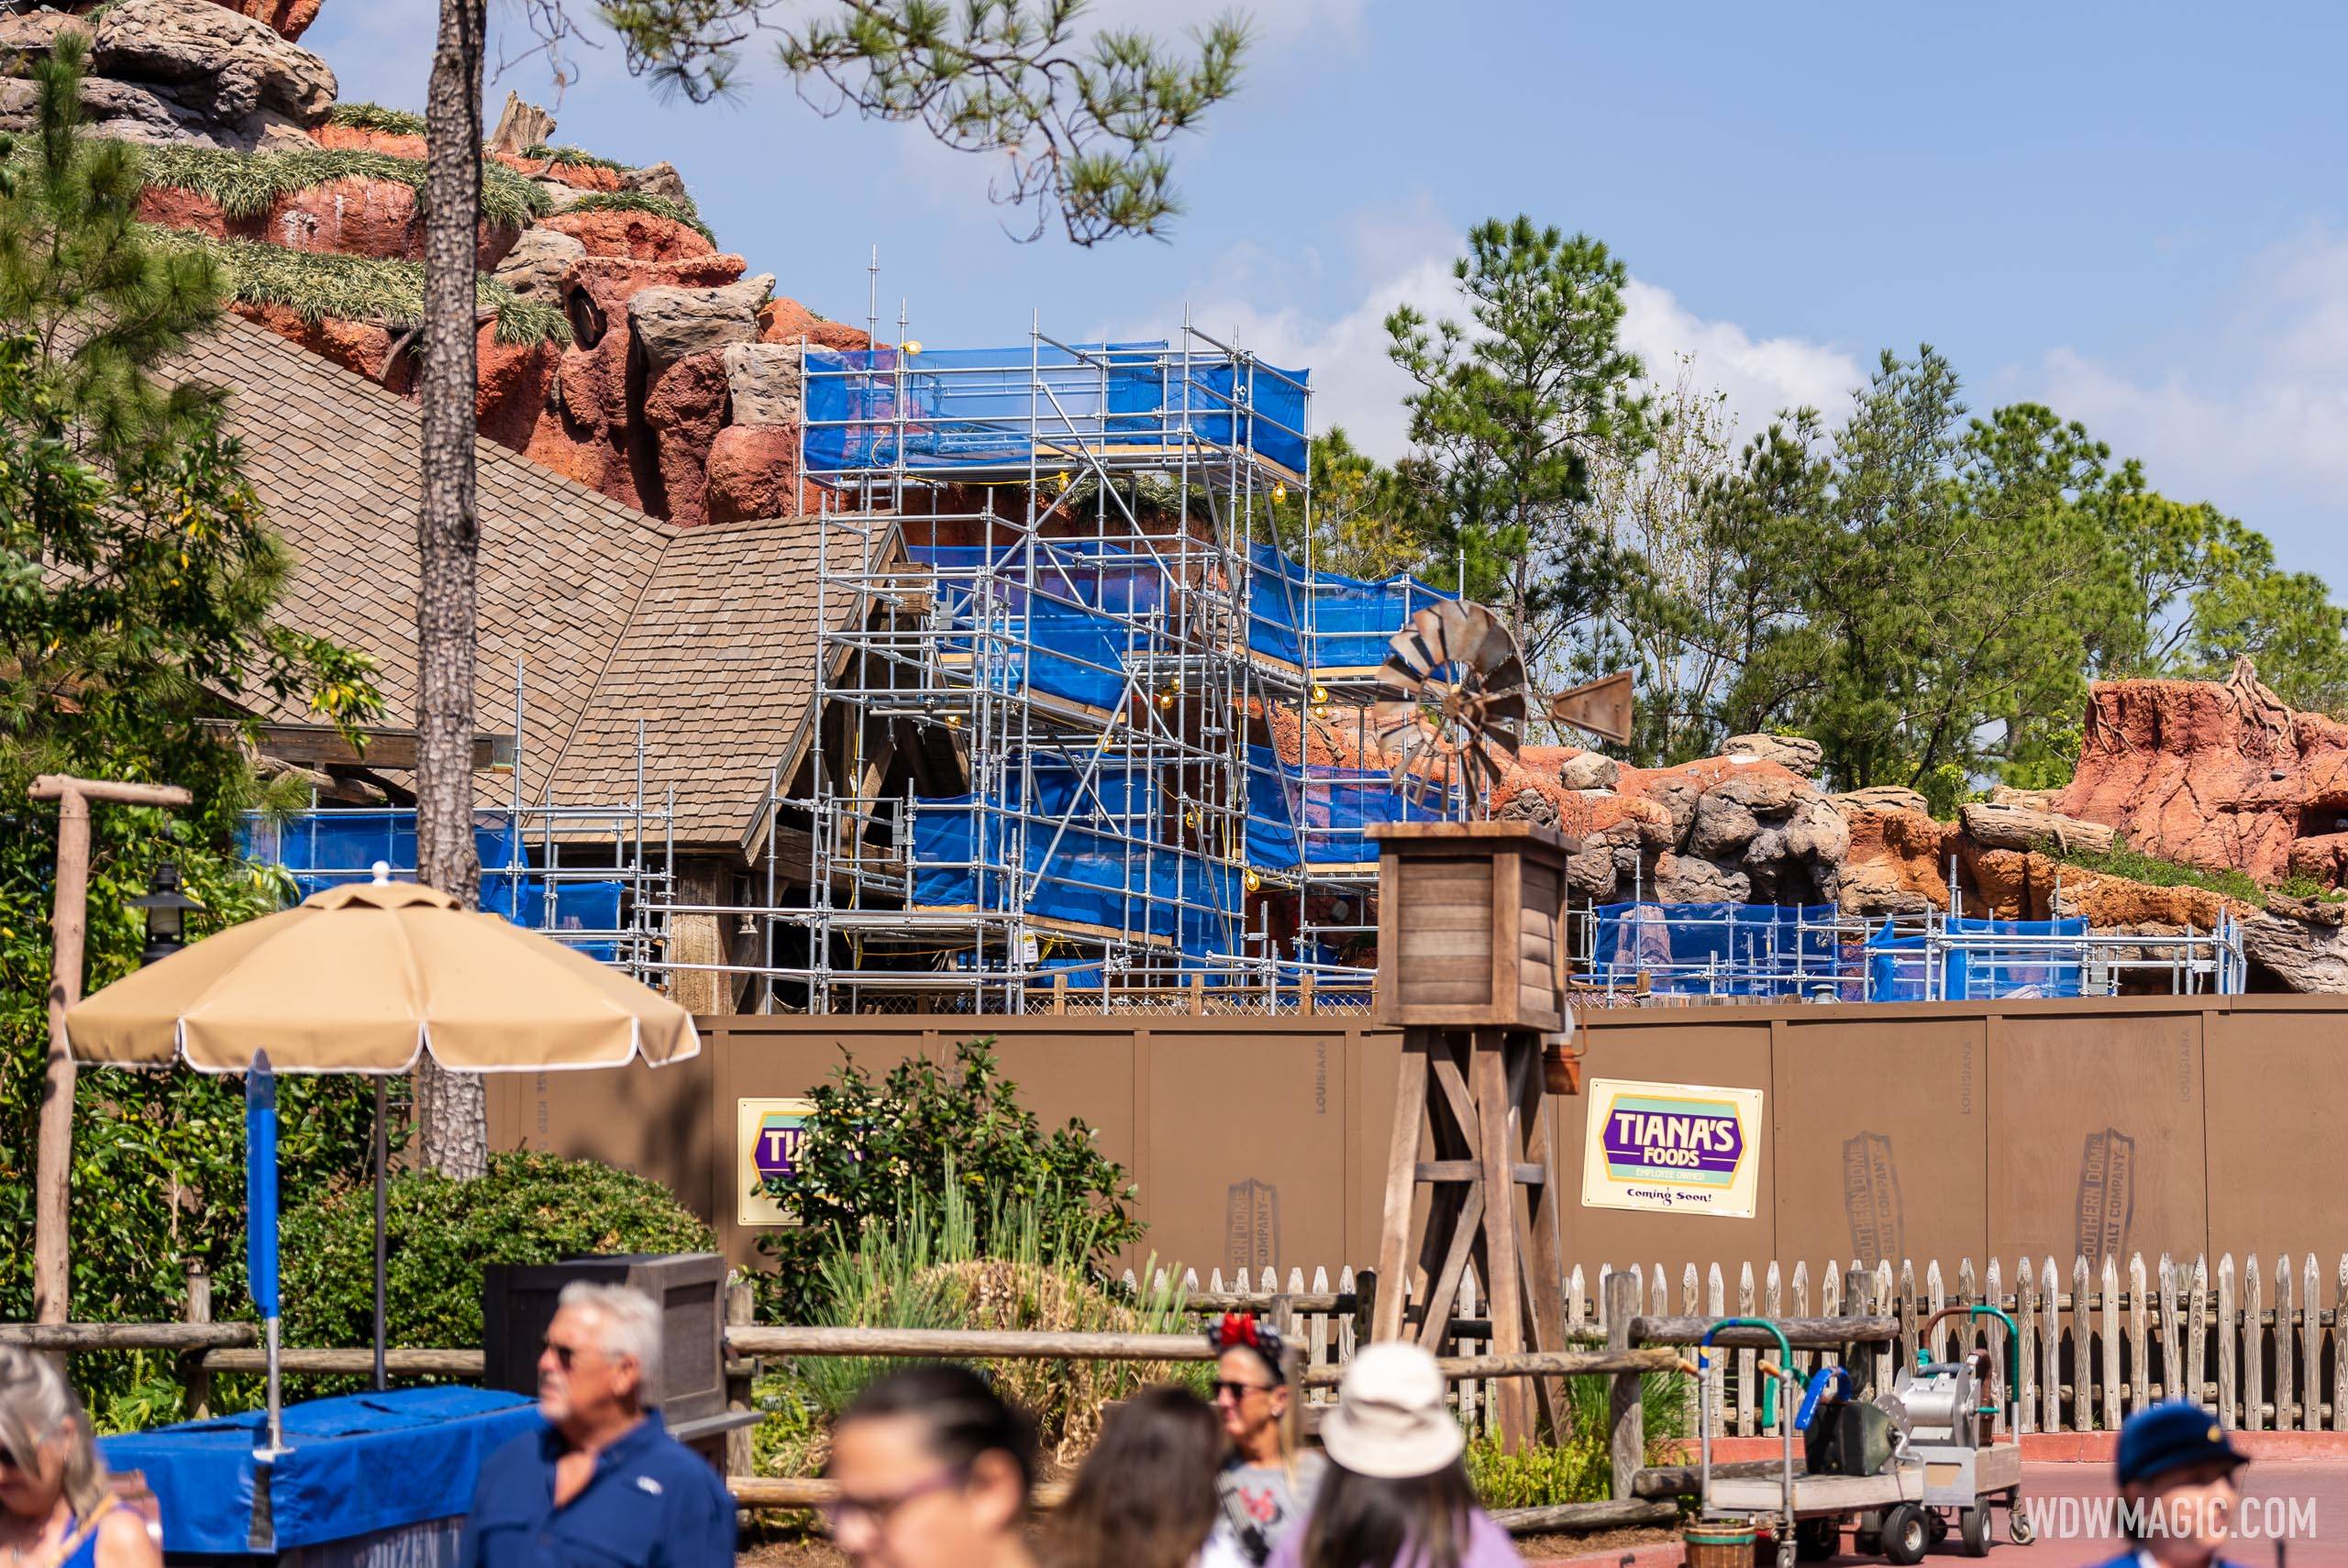 Latest look at Tiana's Bayou Adventure construction at Walt Disney World's Magic Kingdom